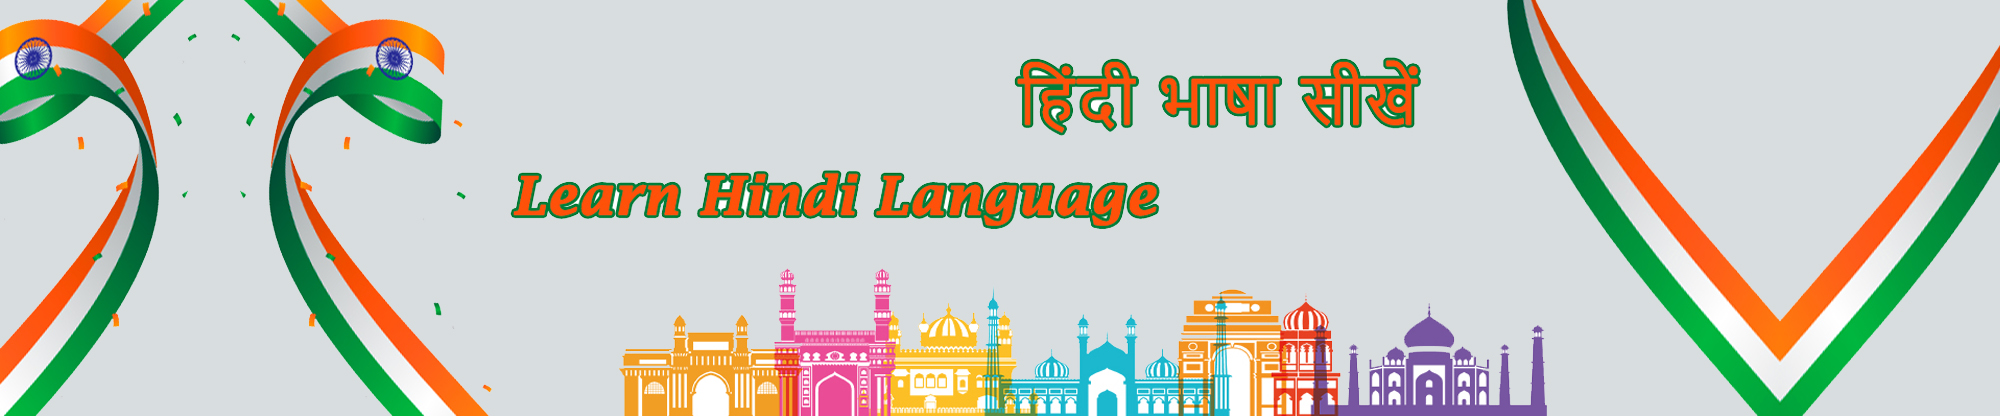 Hindi Language in Sinhala | හින්දි භාෂාව සිංහලෙන්